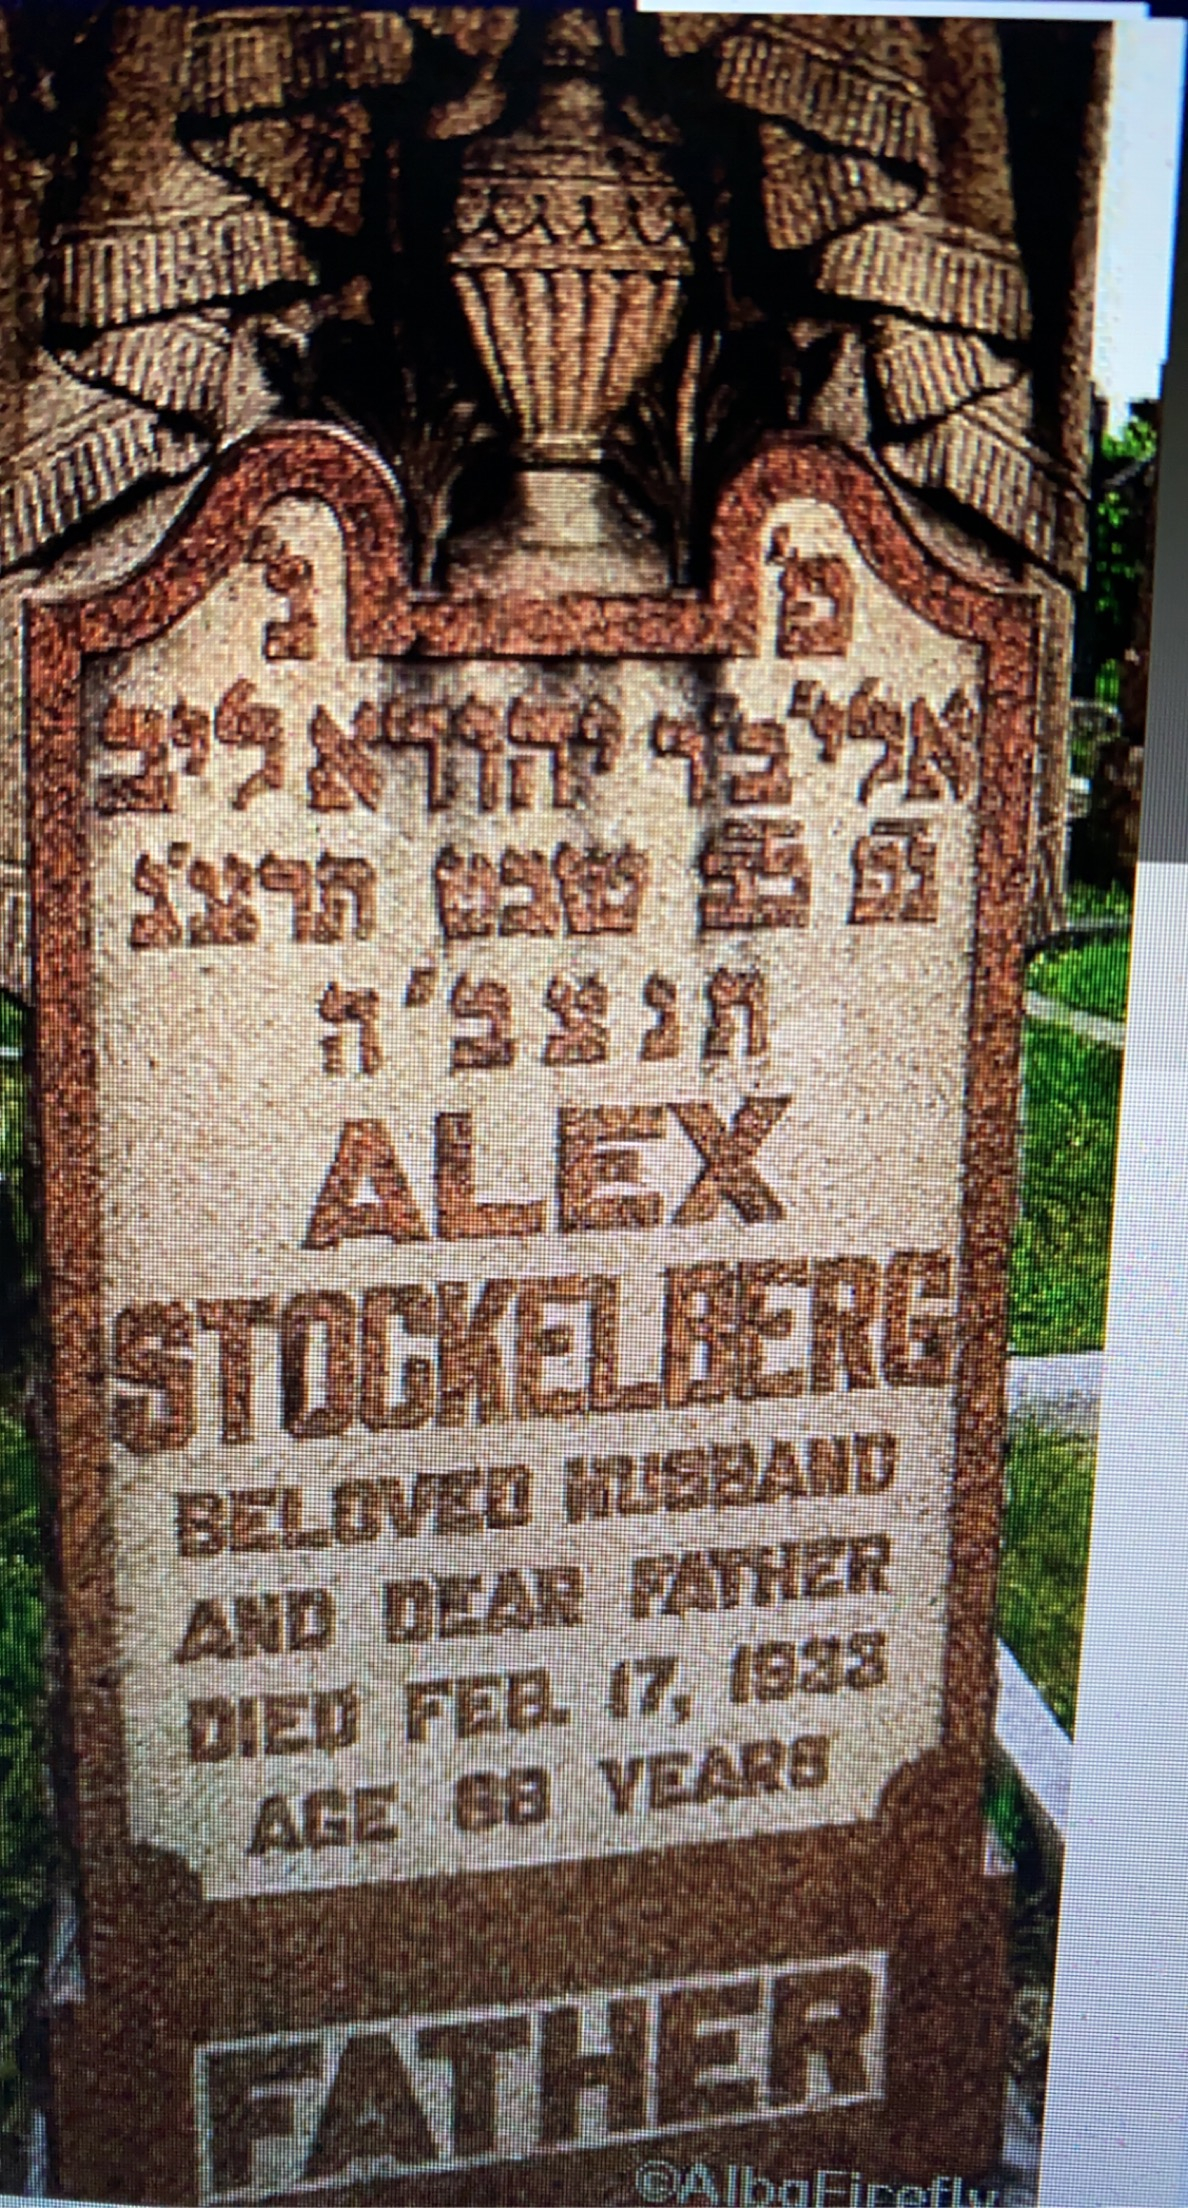 Alex Stockelberg 